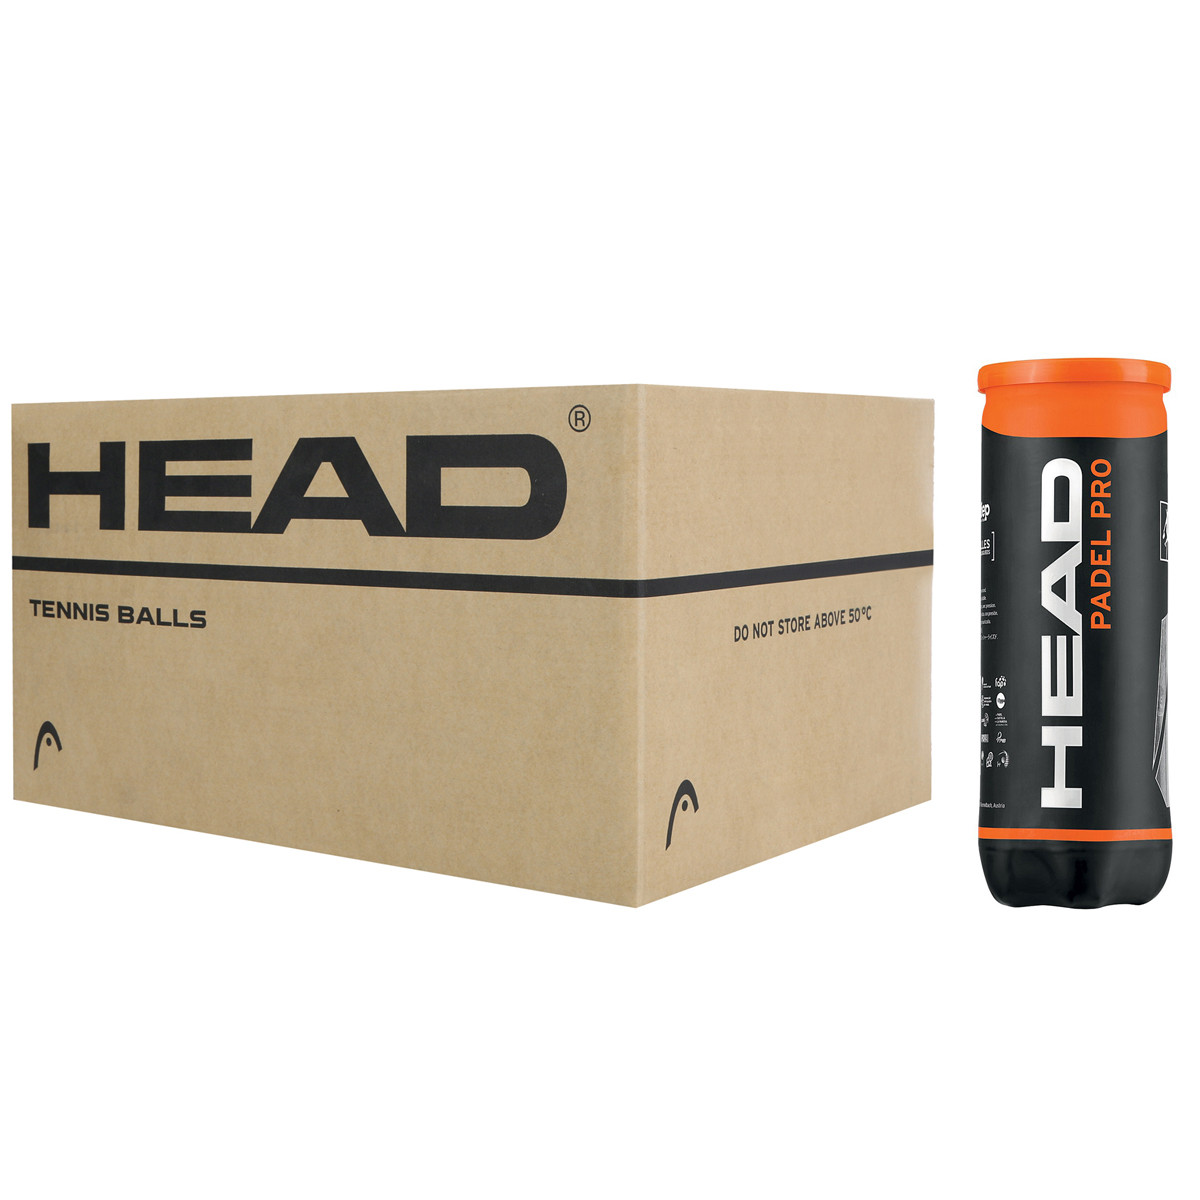 Padel Pro – HEAD